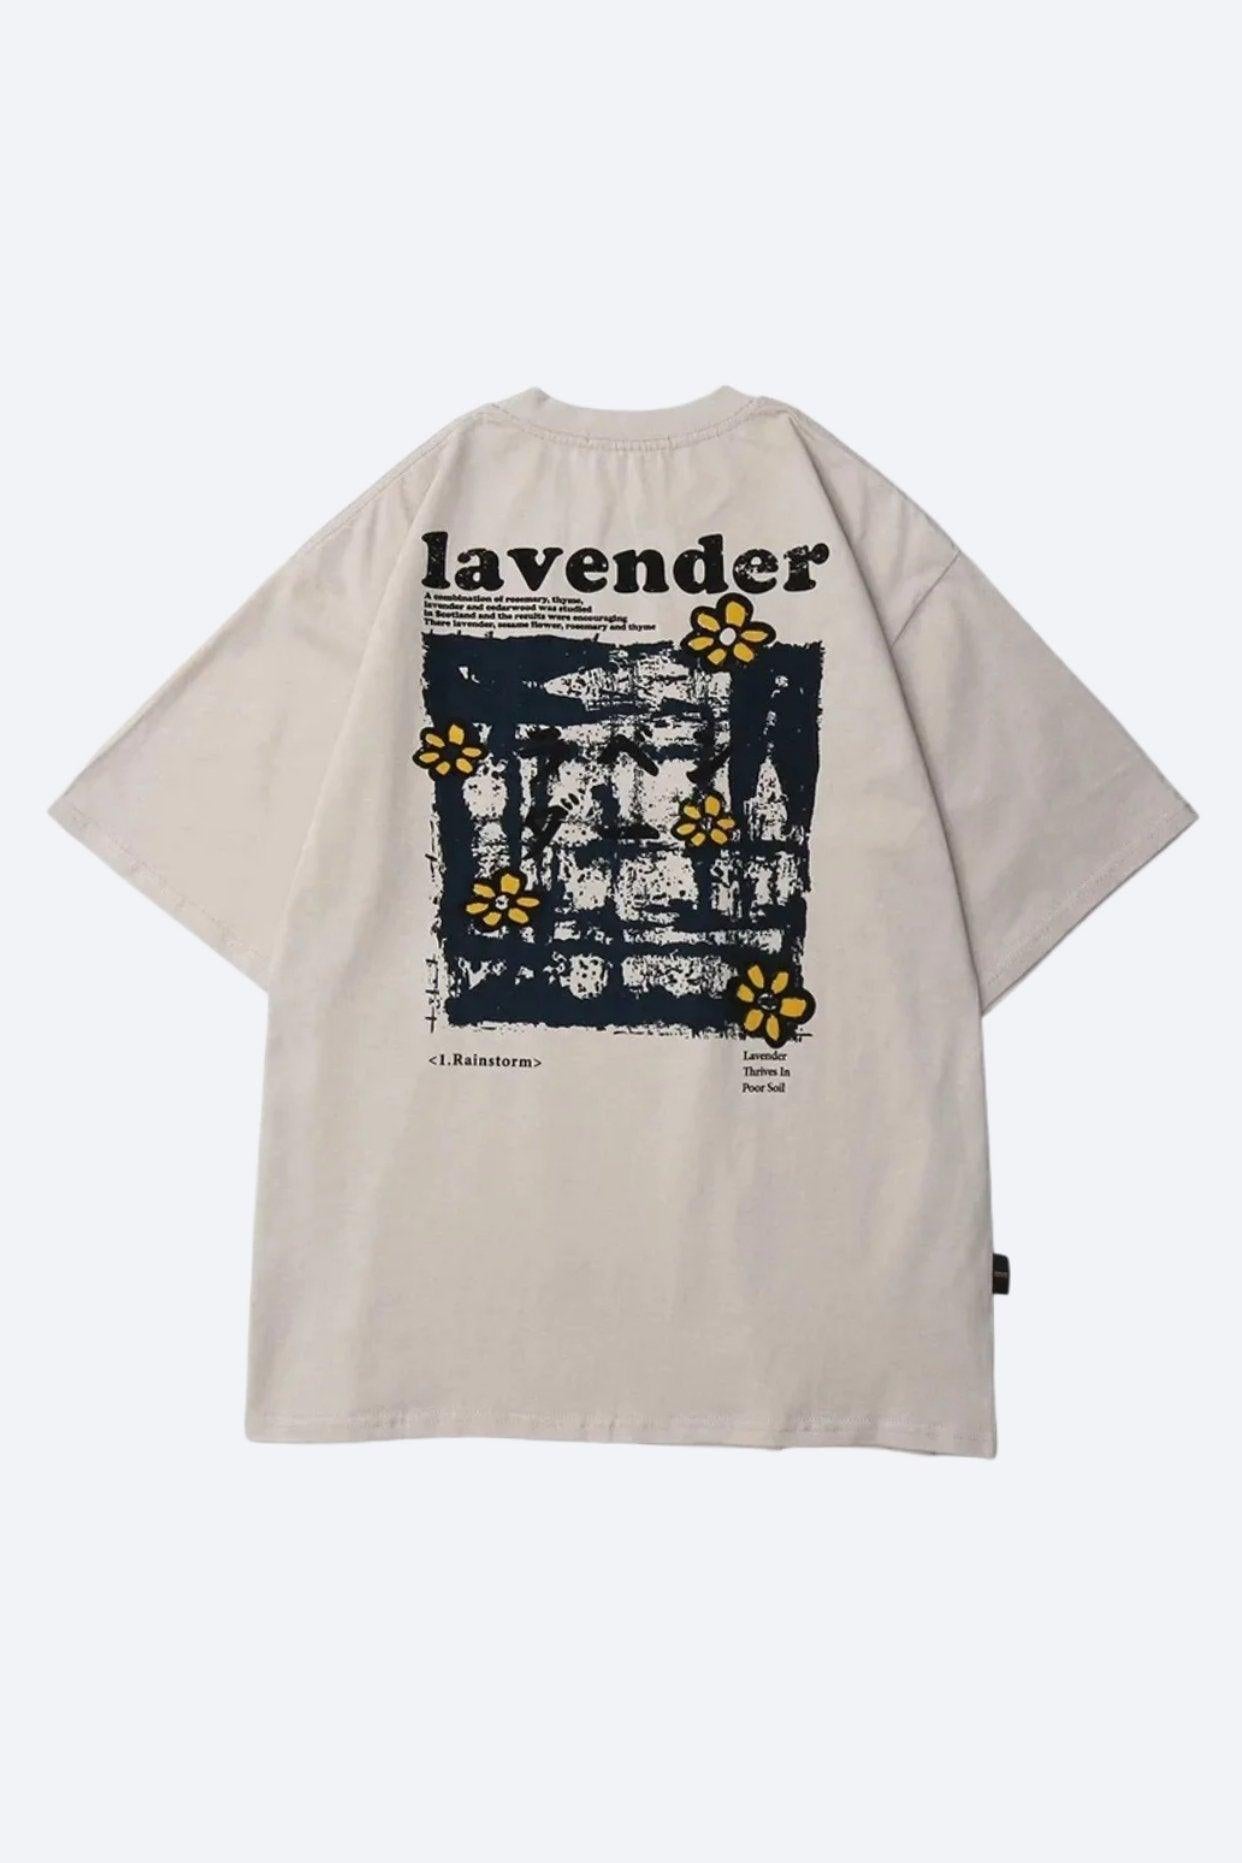 Lavender T-Shirt Streetwear Brand Techwear Combat Tactical YUGEN THEORY